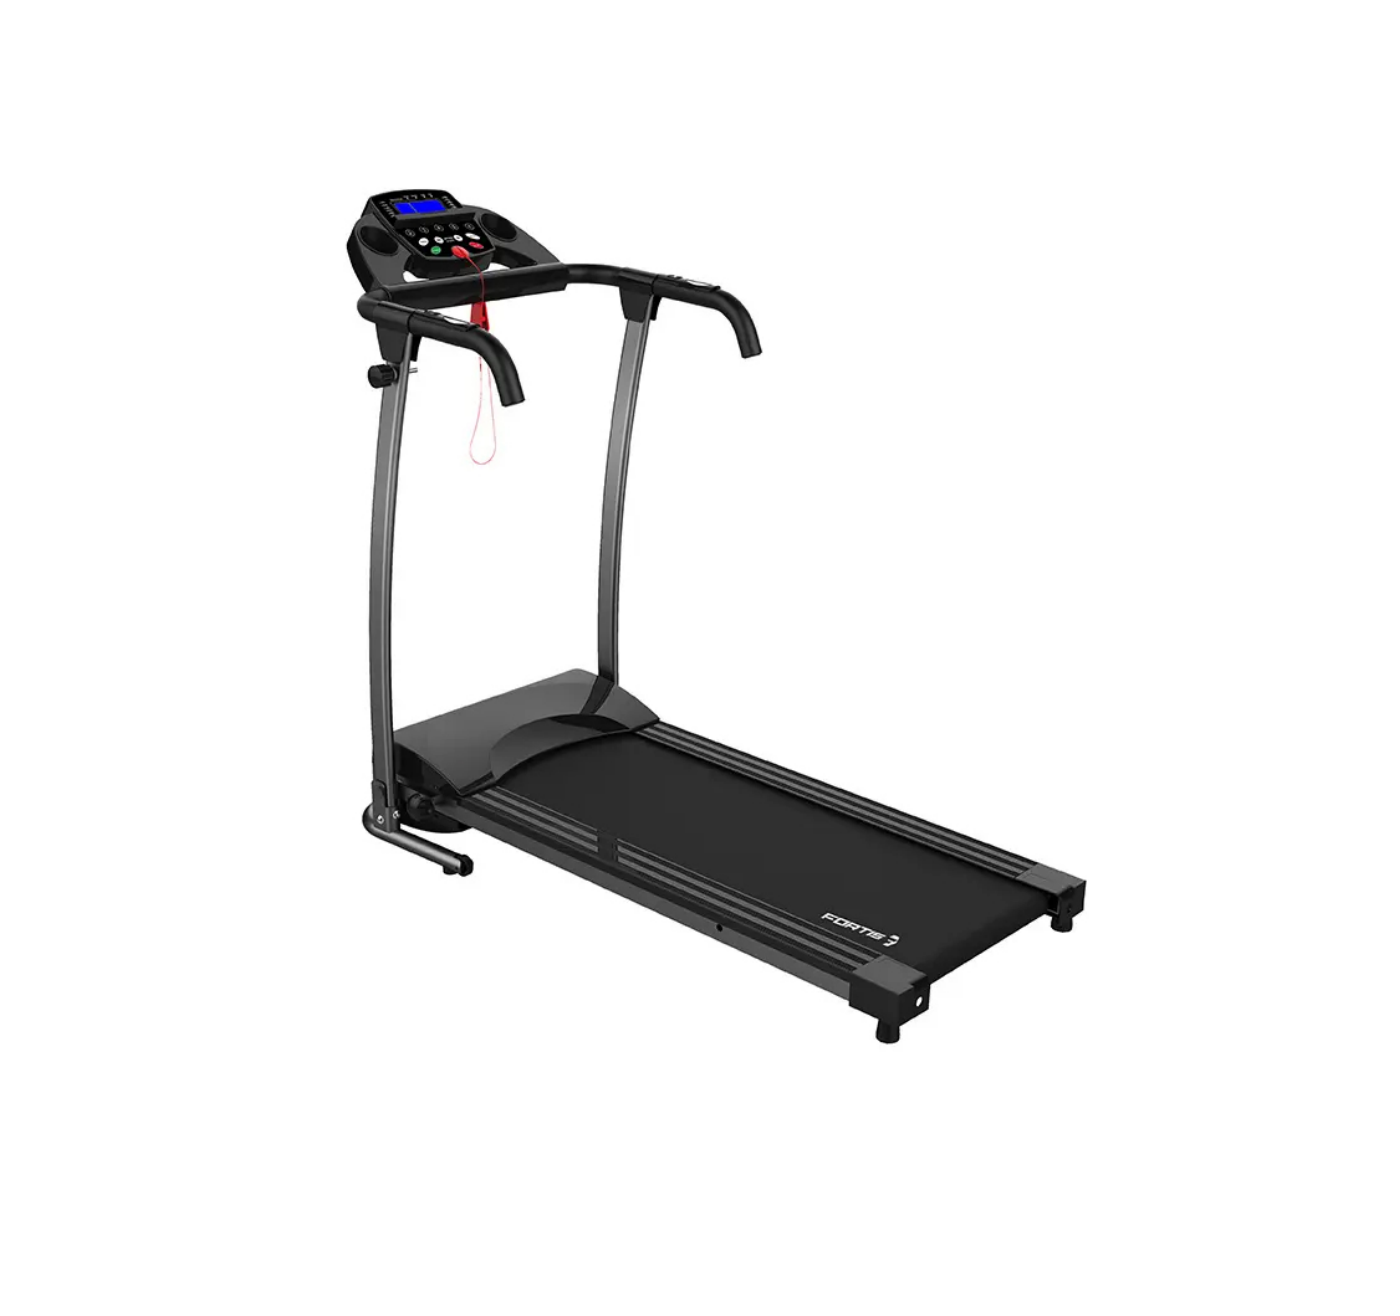 FORTIS Belt Adjustable Incline Electric Treadmill User Guide